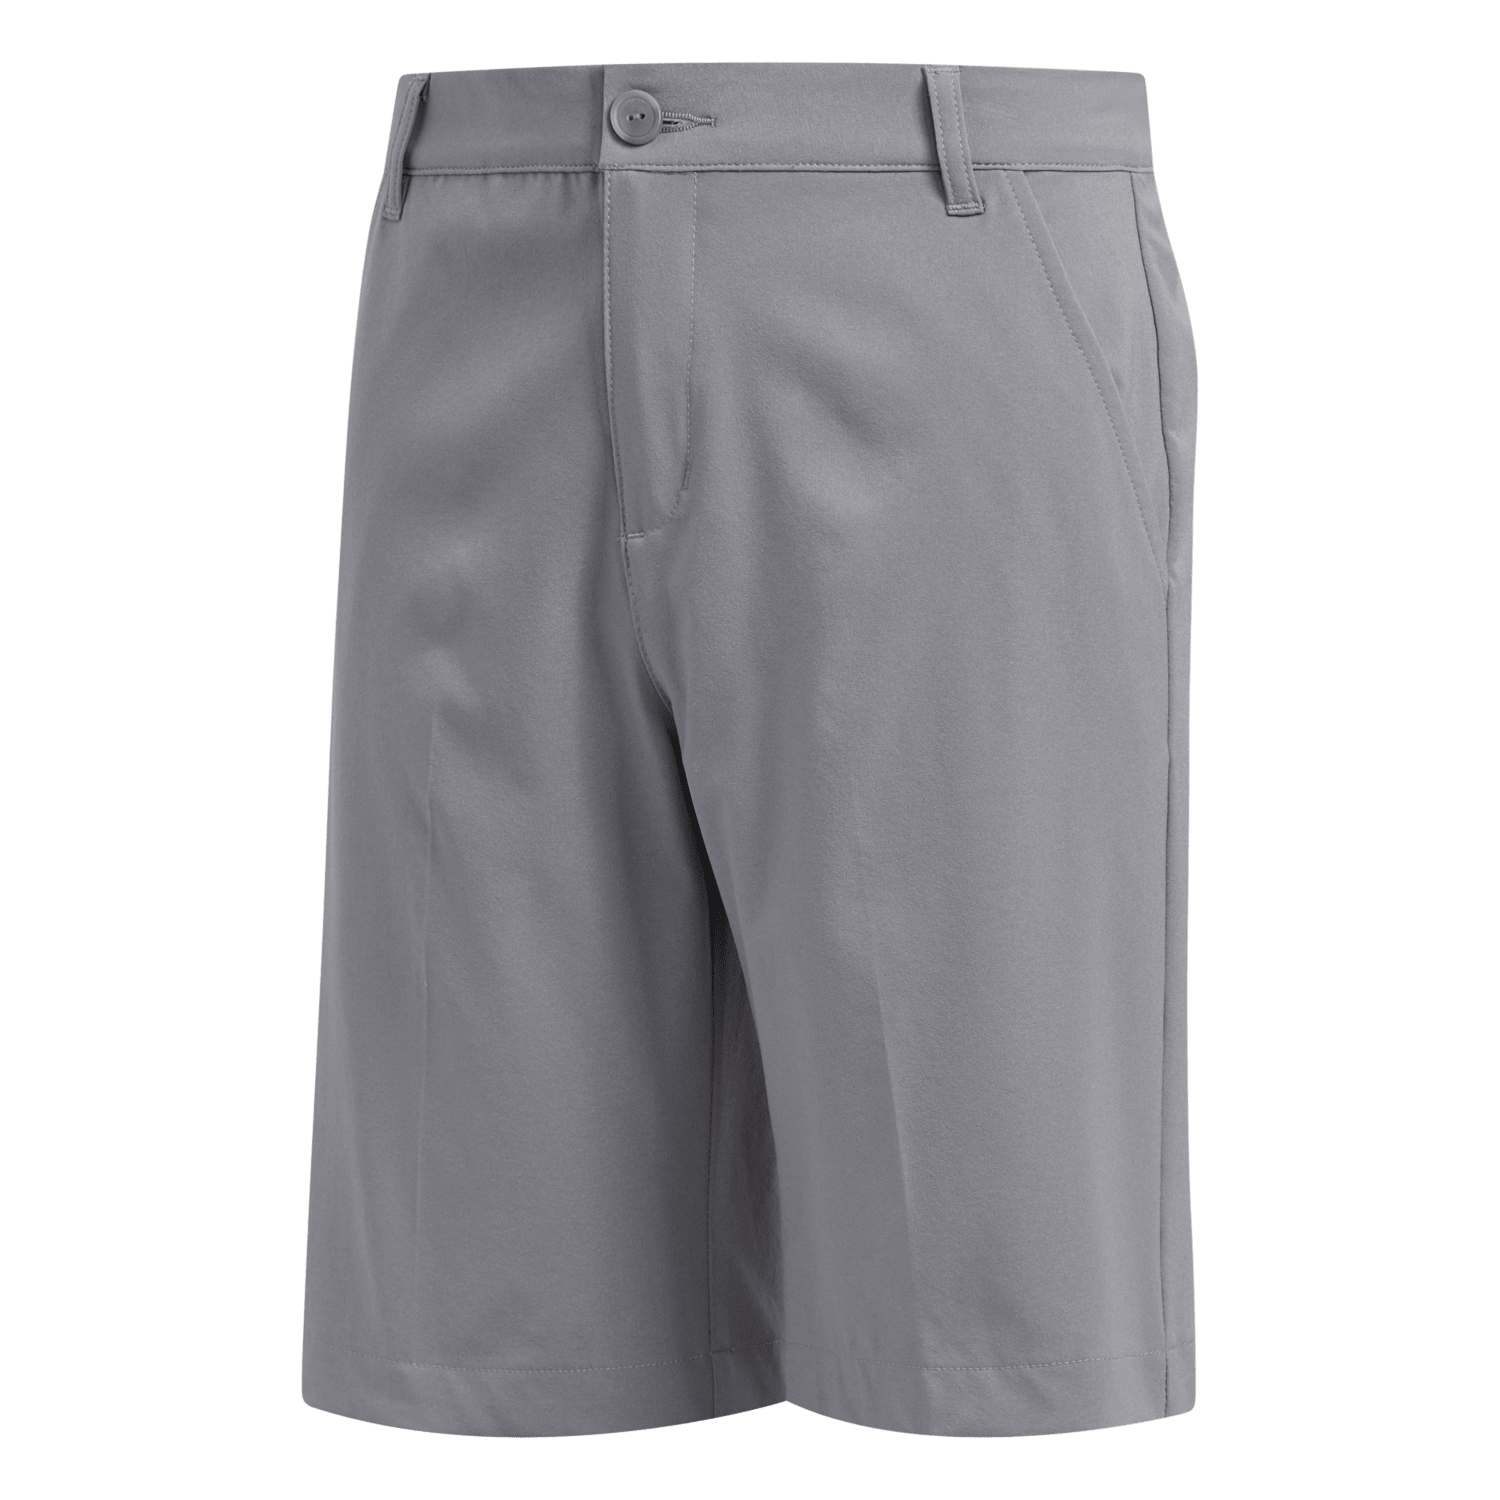 adidas mens golf shorts on sale